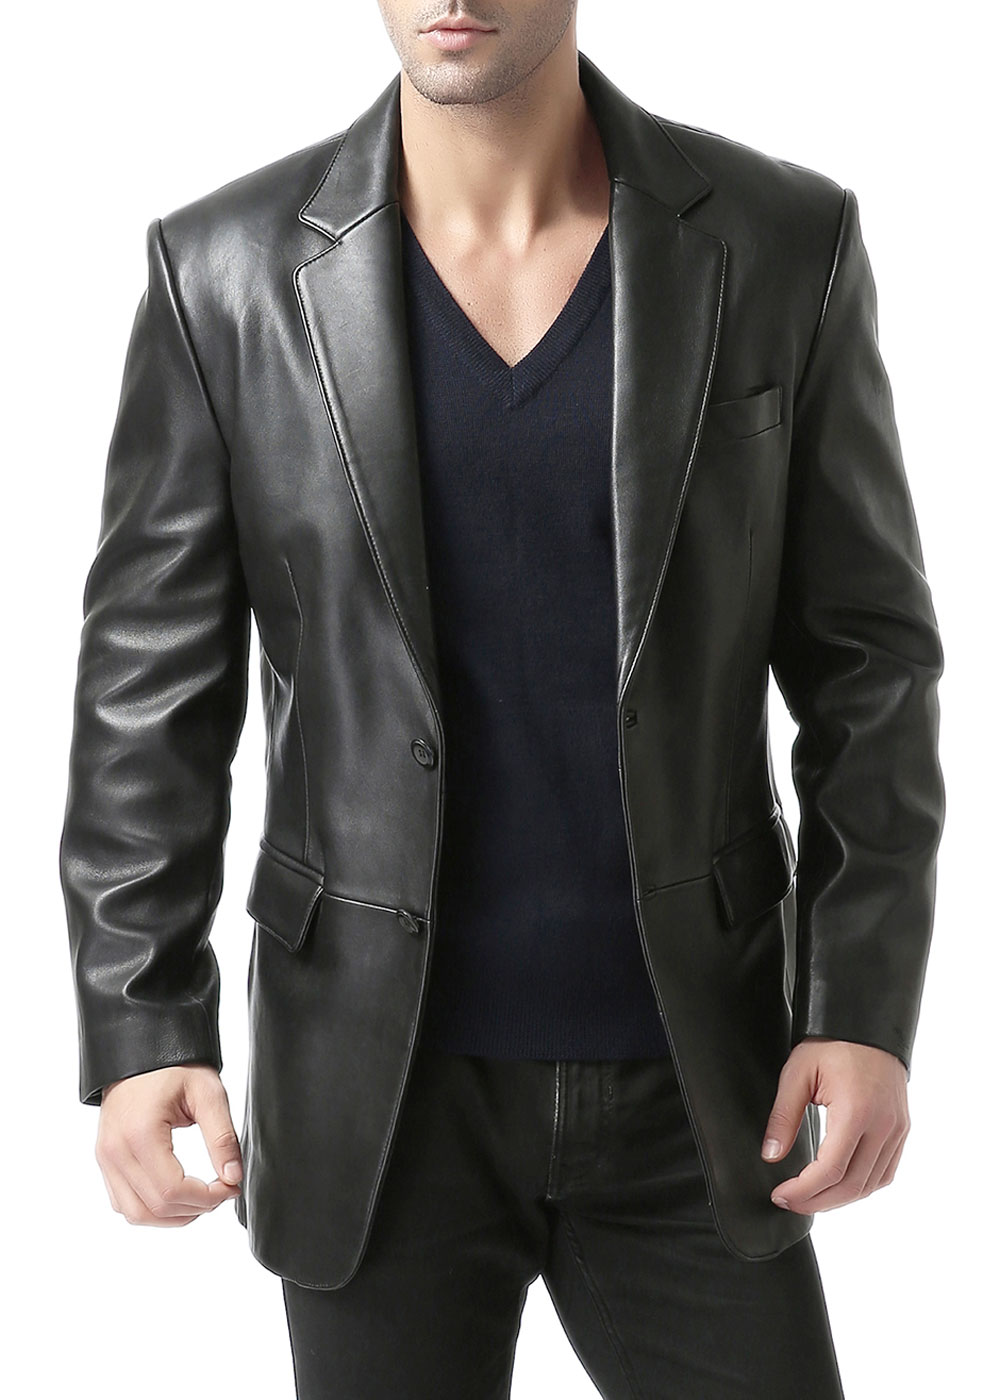 Doctrine shirt petticoat BGSD Men's Richard Classic 2-Button Leather Blazer Lambskin Sport Coat  Jacket - Big & Tall Extra Long